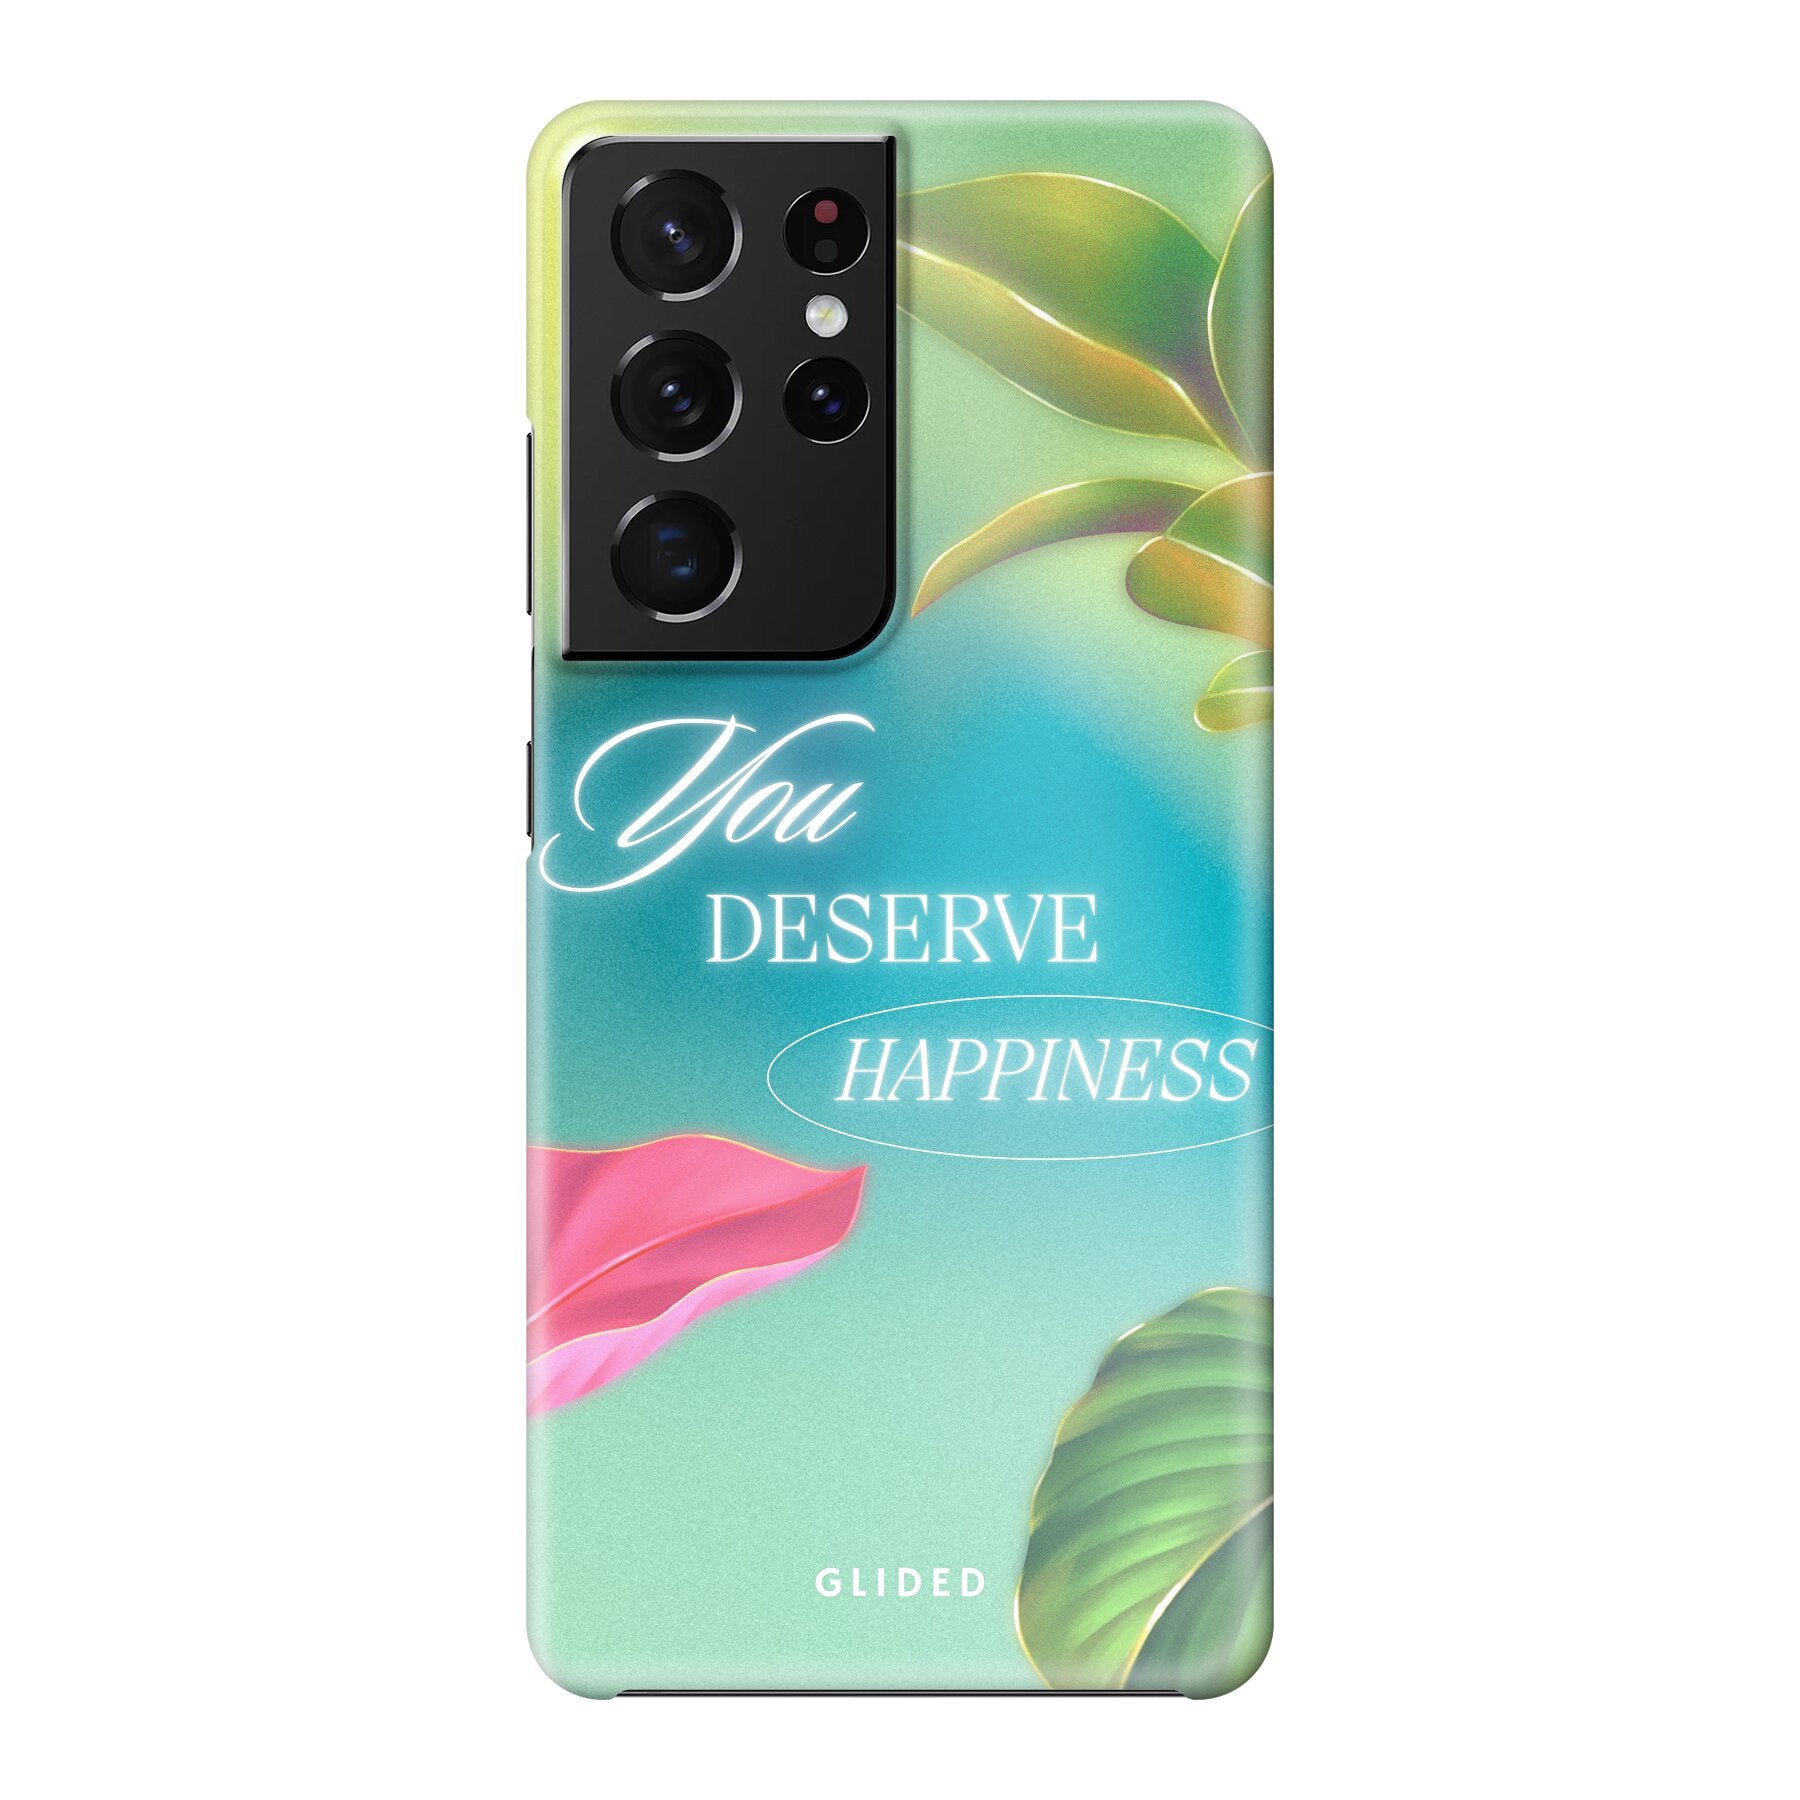 Happiness - Samsung Galaxy S21 Ultra 5G - Hard Case